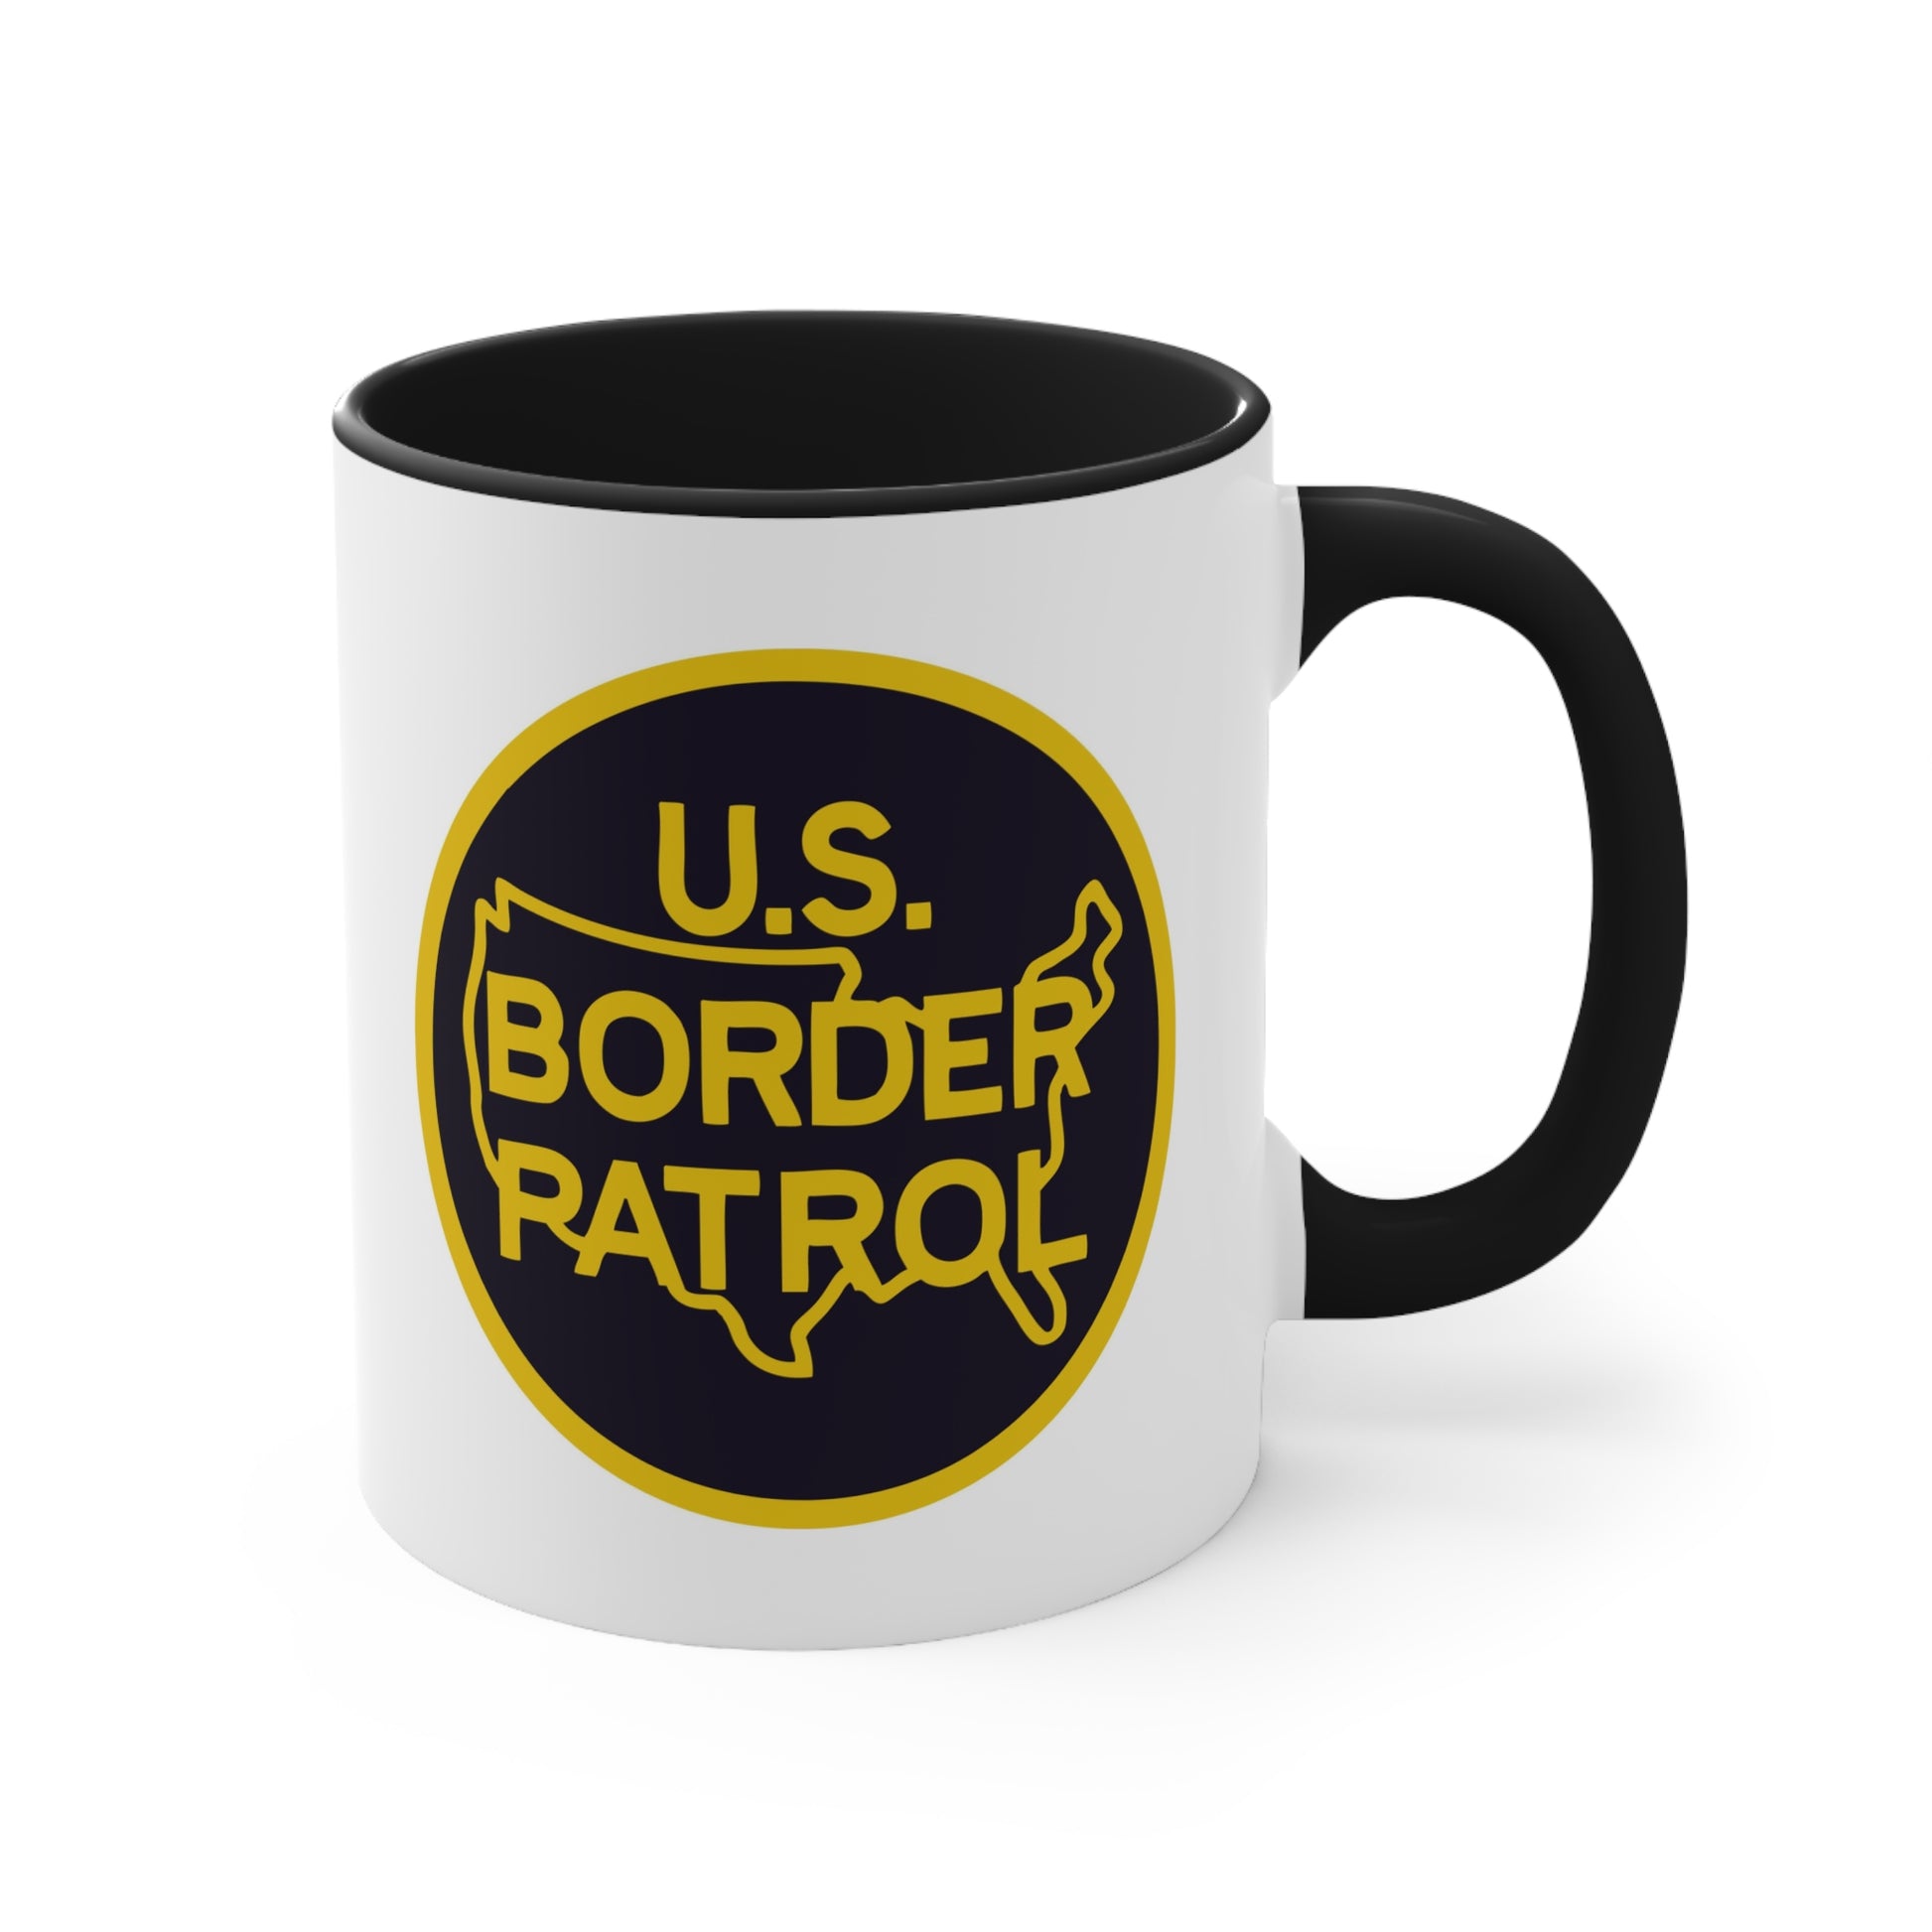 US Border Patrol Coffee Mug - Double Sided Black Accent White Ceramic 11oz by TheGlassyLass